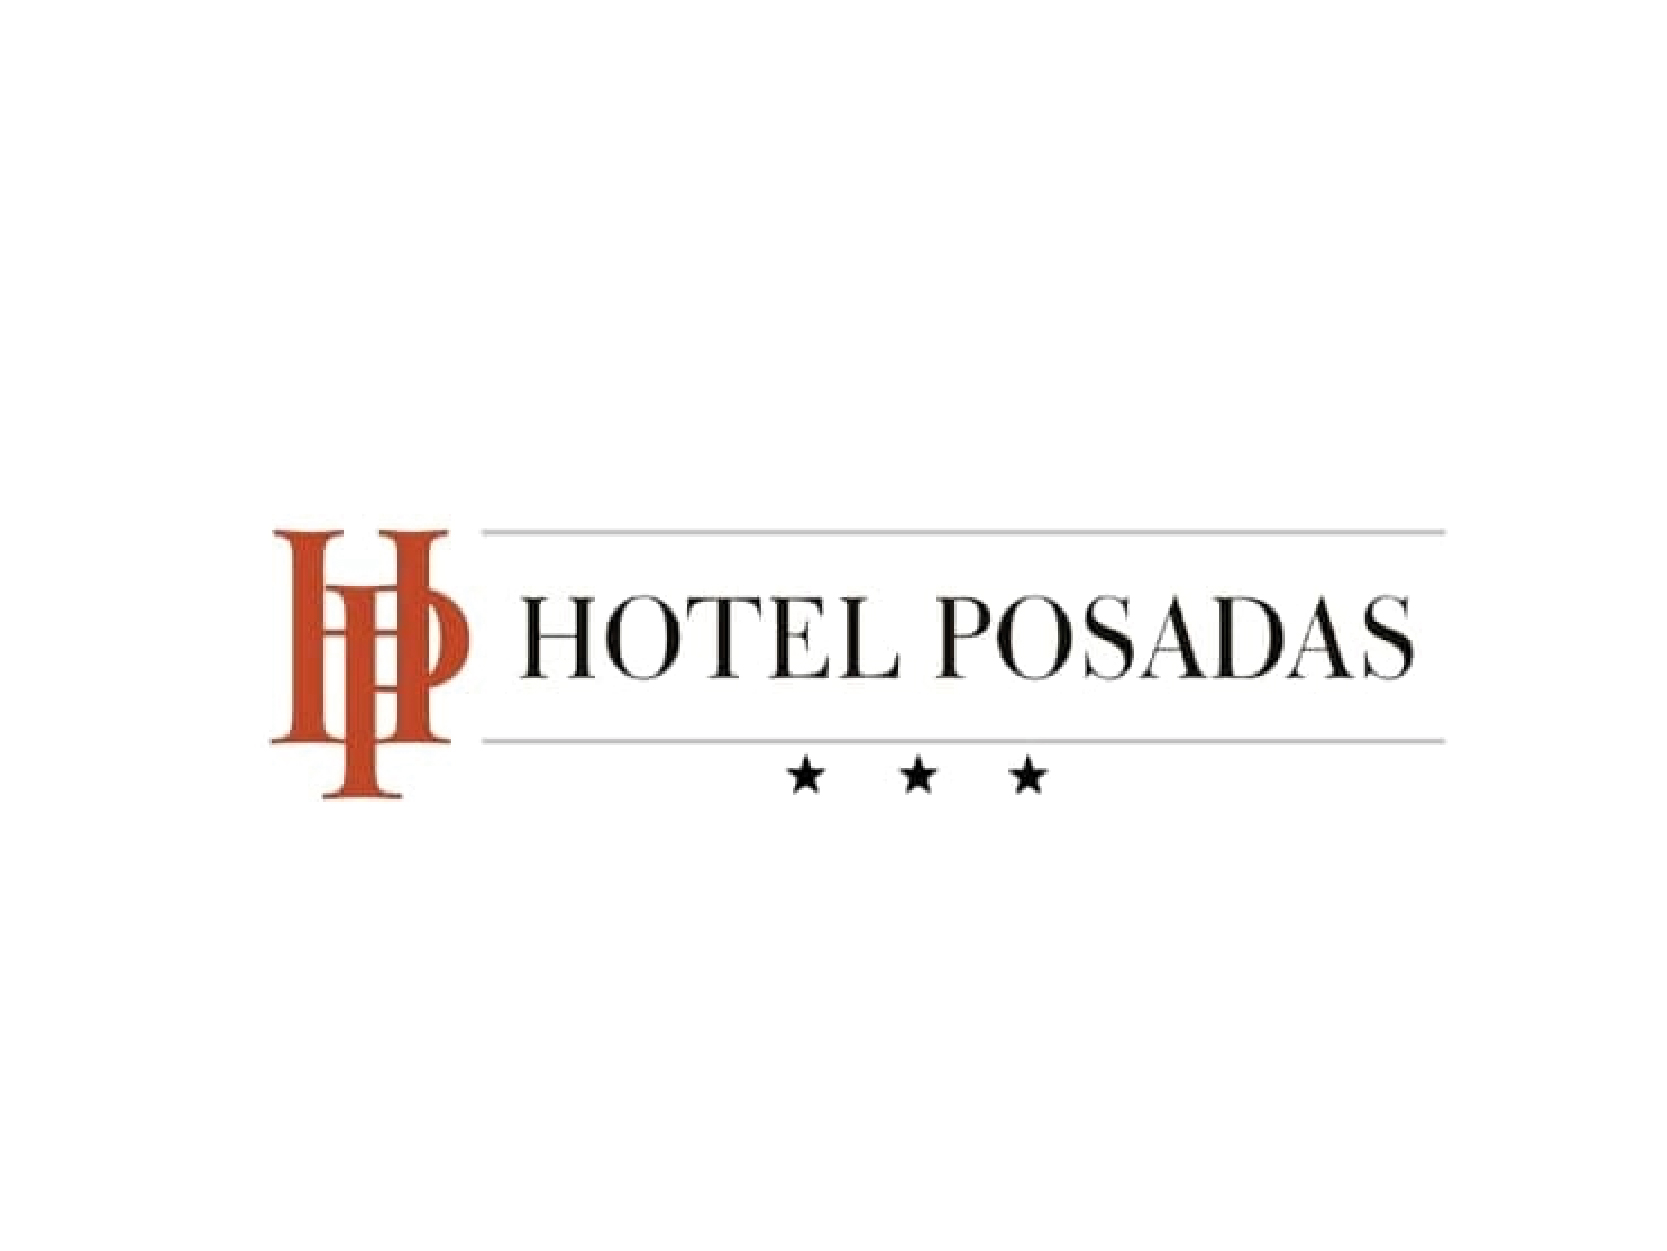 HOTEL POSADAS